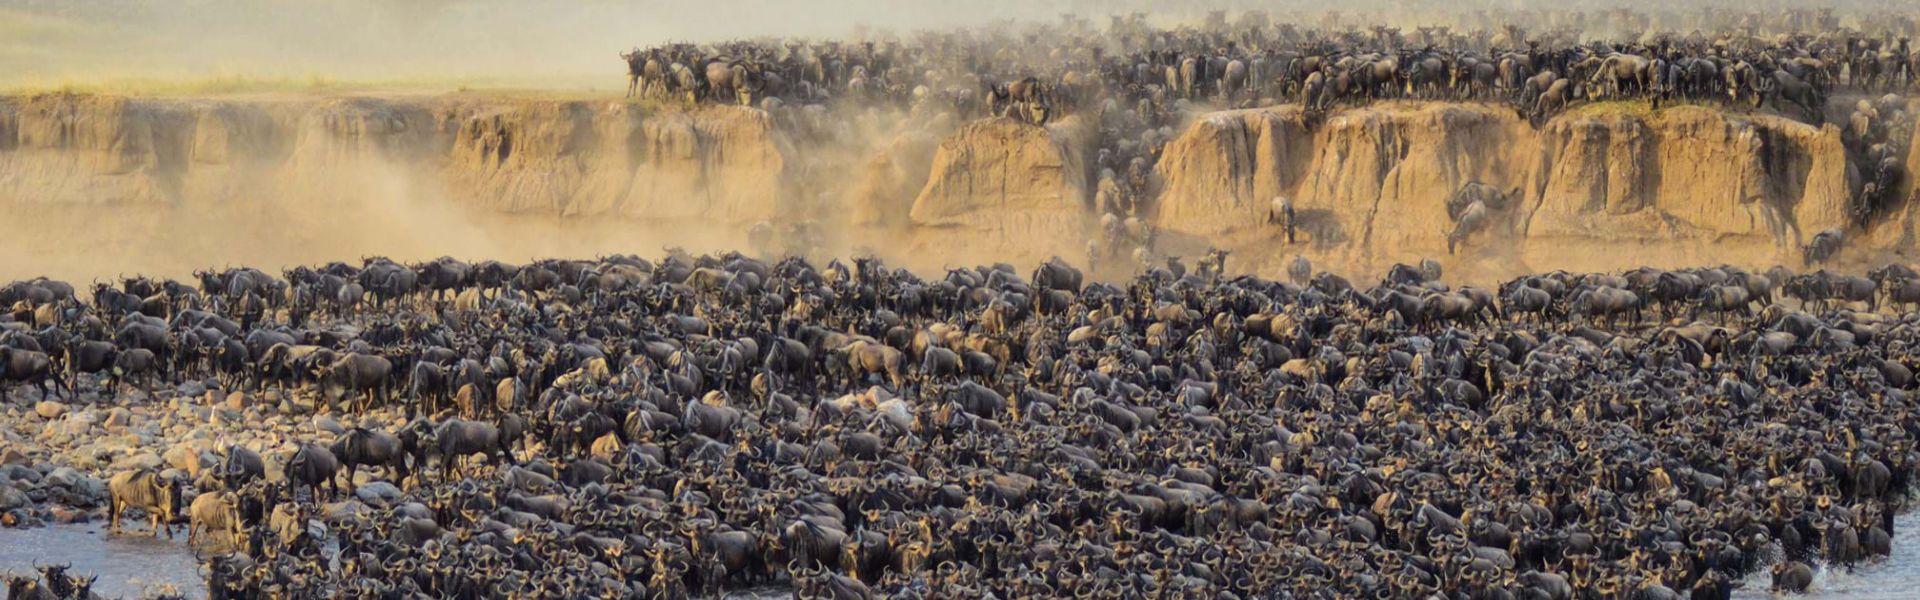 Tanzania Migration Safari 